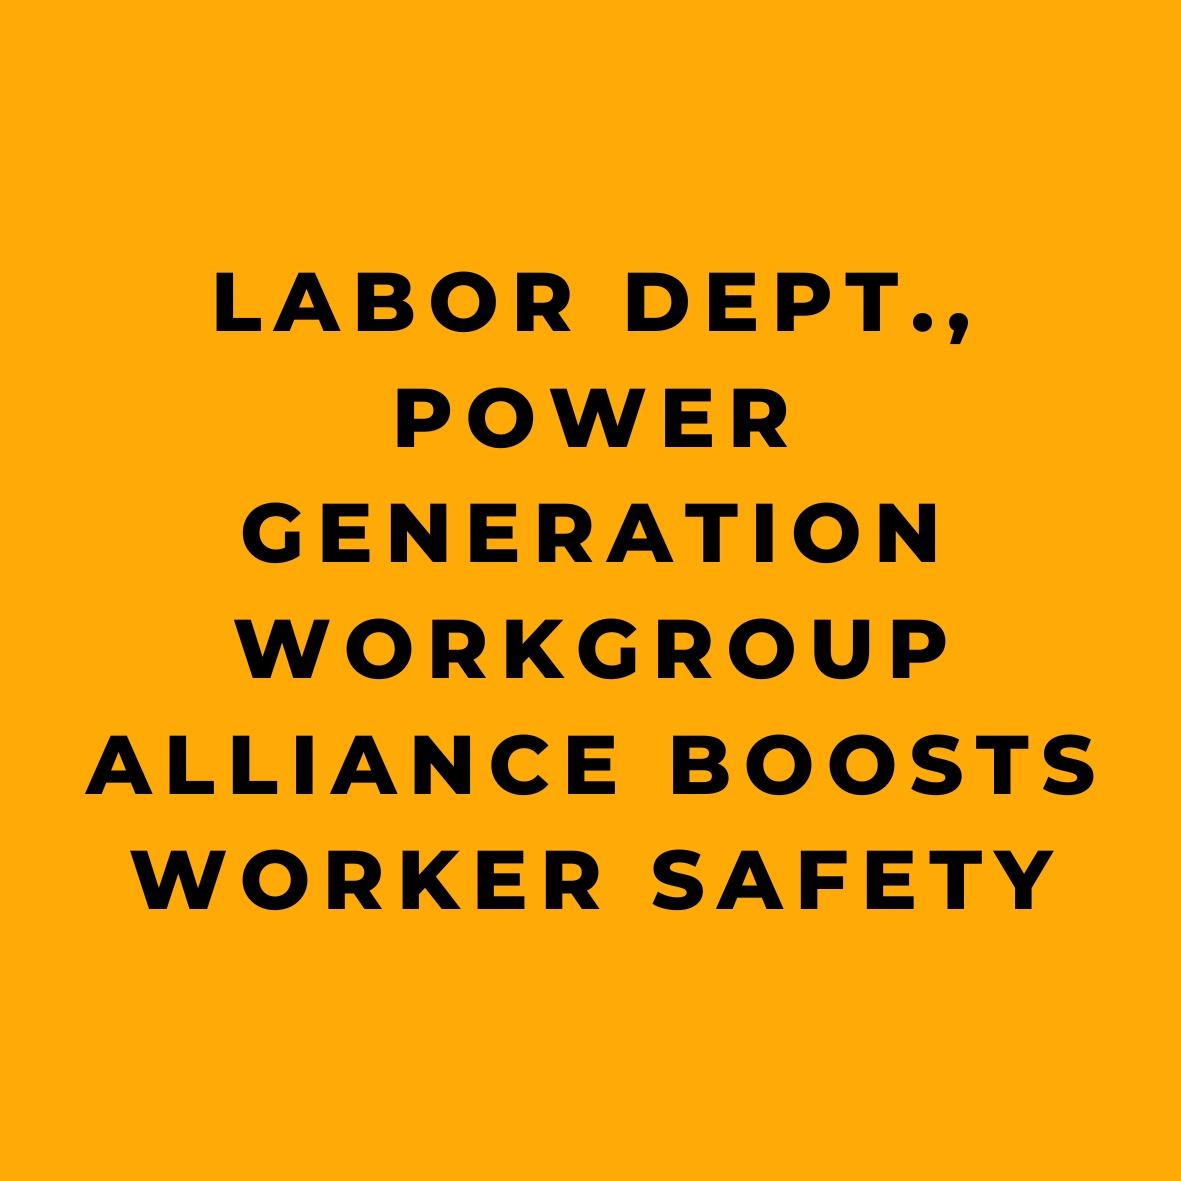 Labor Dept., Power Generation Workgroup Alliance Boosts Worker Safety